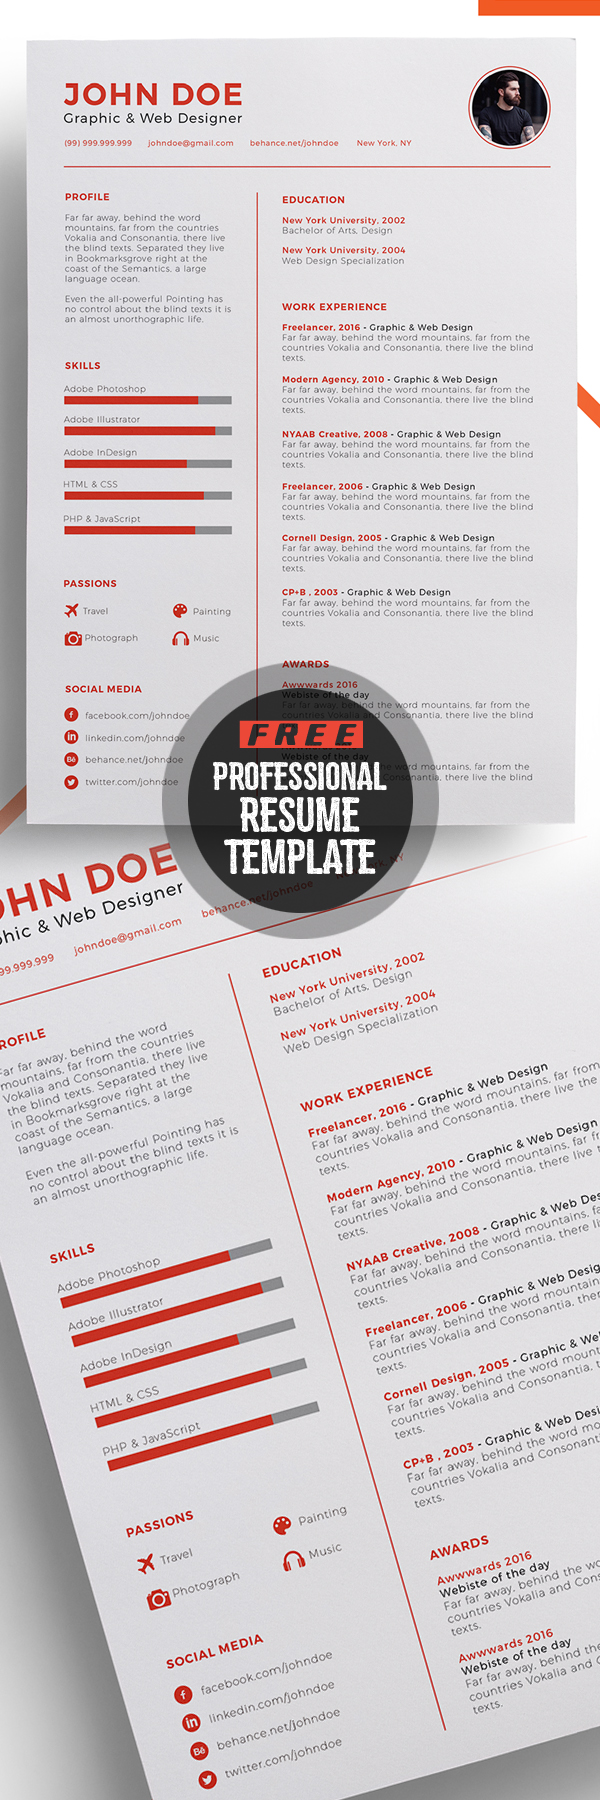 Professional Free Resume Template Design